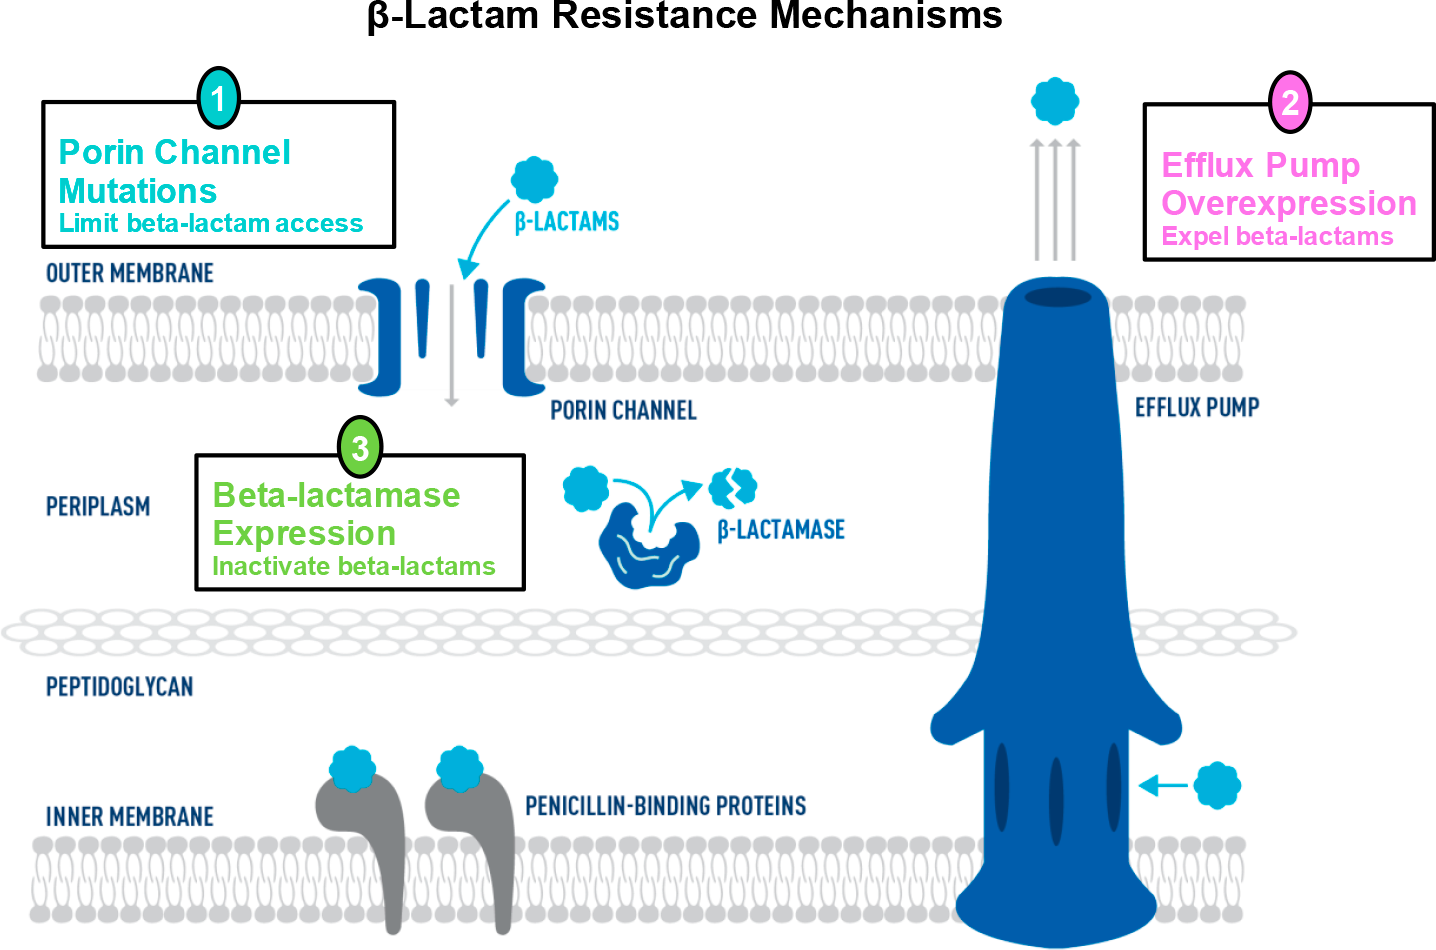 beta lactam resistance mechanisms - Fetroja/Fetcroja: New Cephalosporin That Bypasses All Antibiotic Resistance